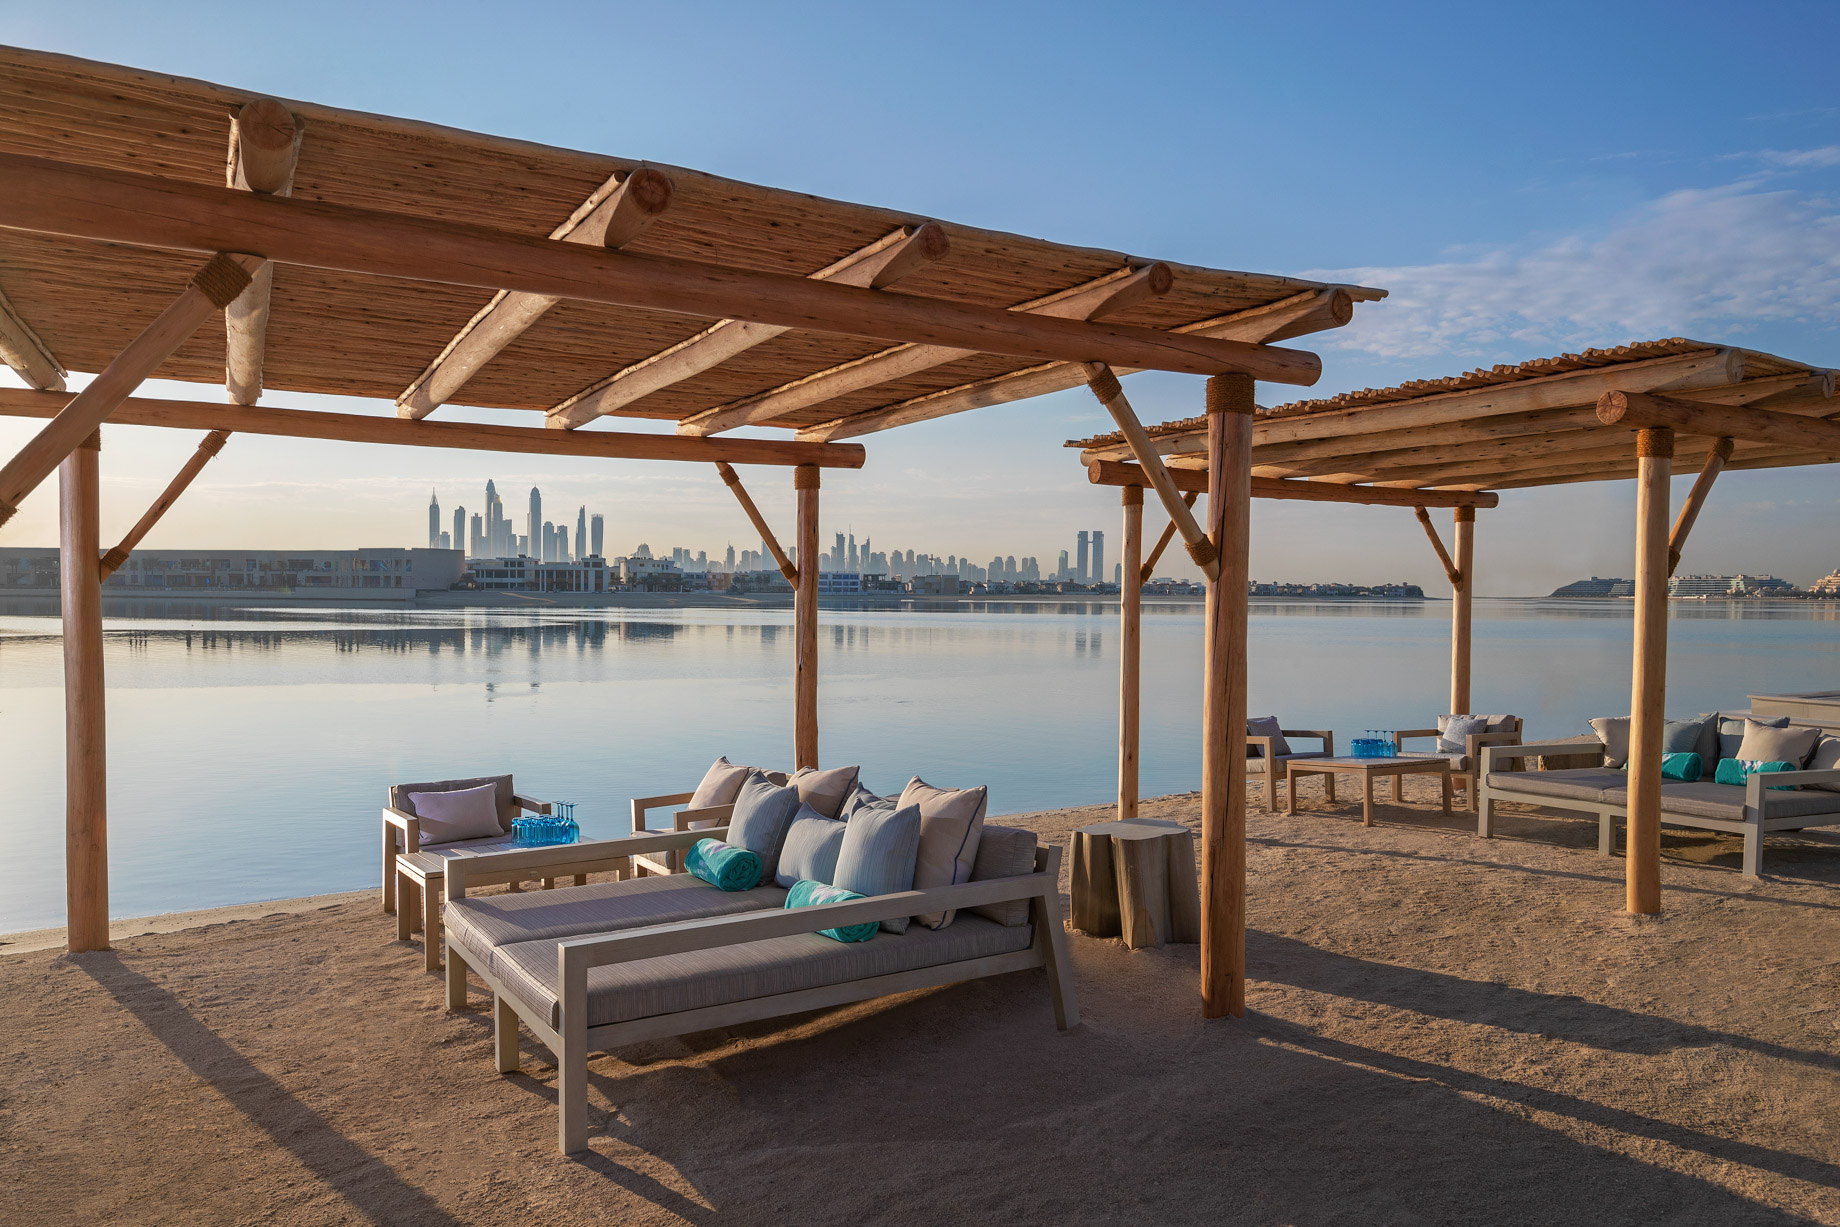 Atlantis The Palm Resort - Crescent Rd, Dubai, UAE - White Beach Club Sand Lounge